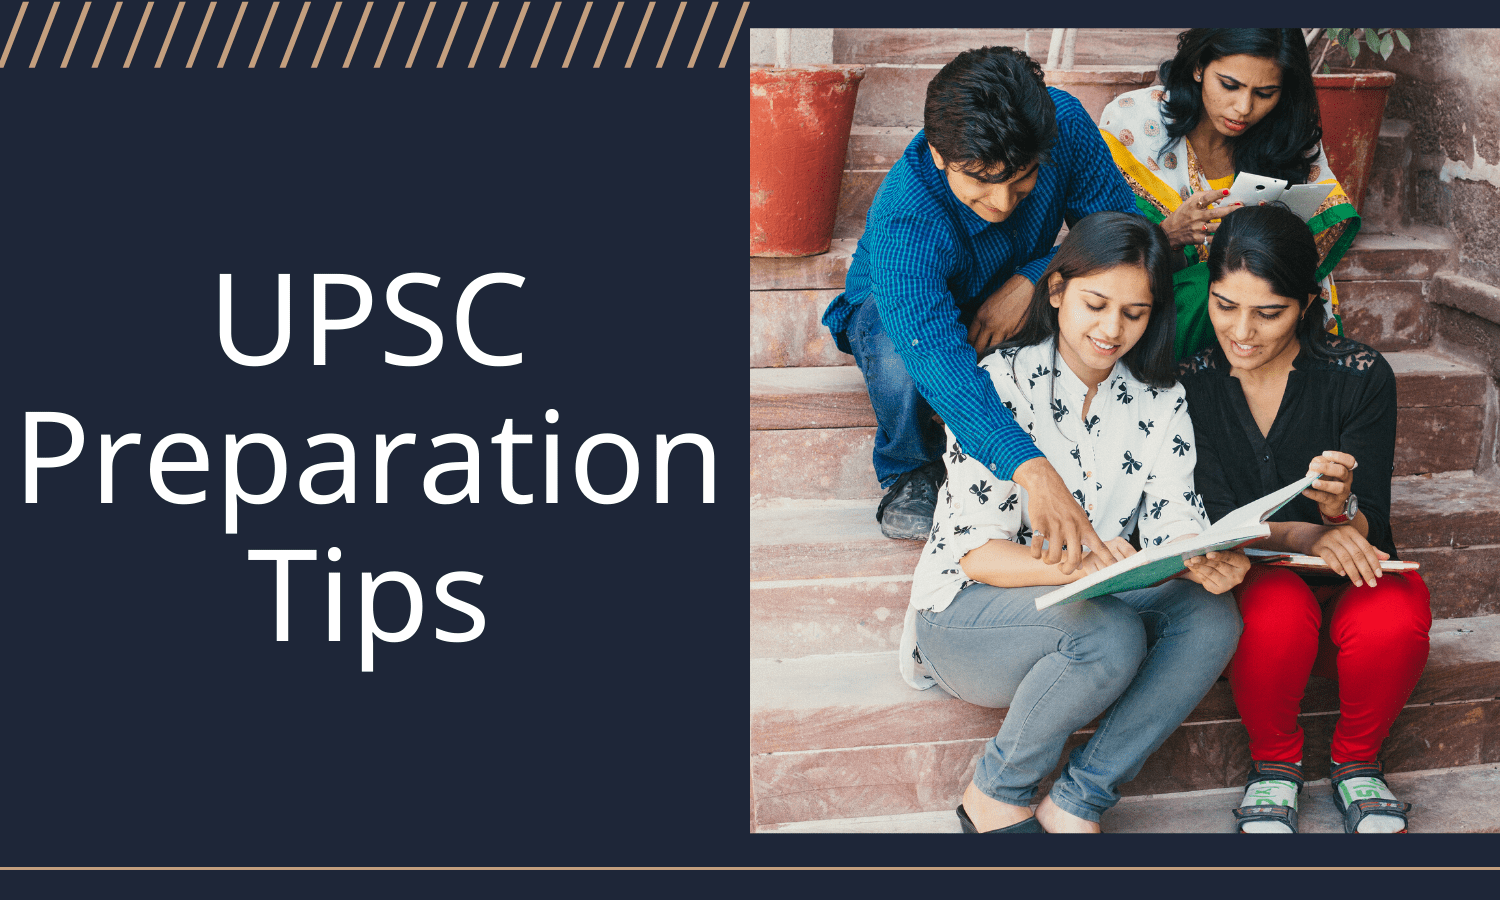 UPSC preparation tips